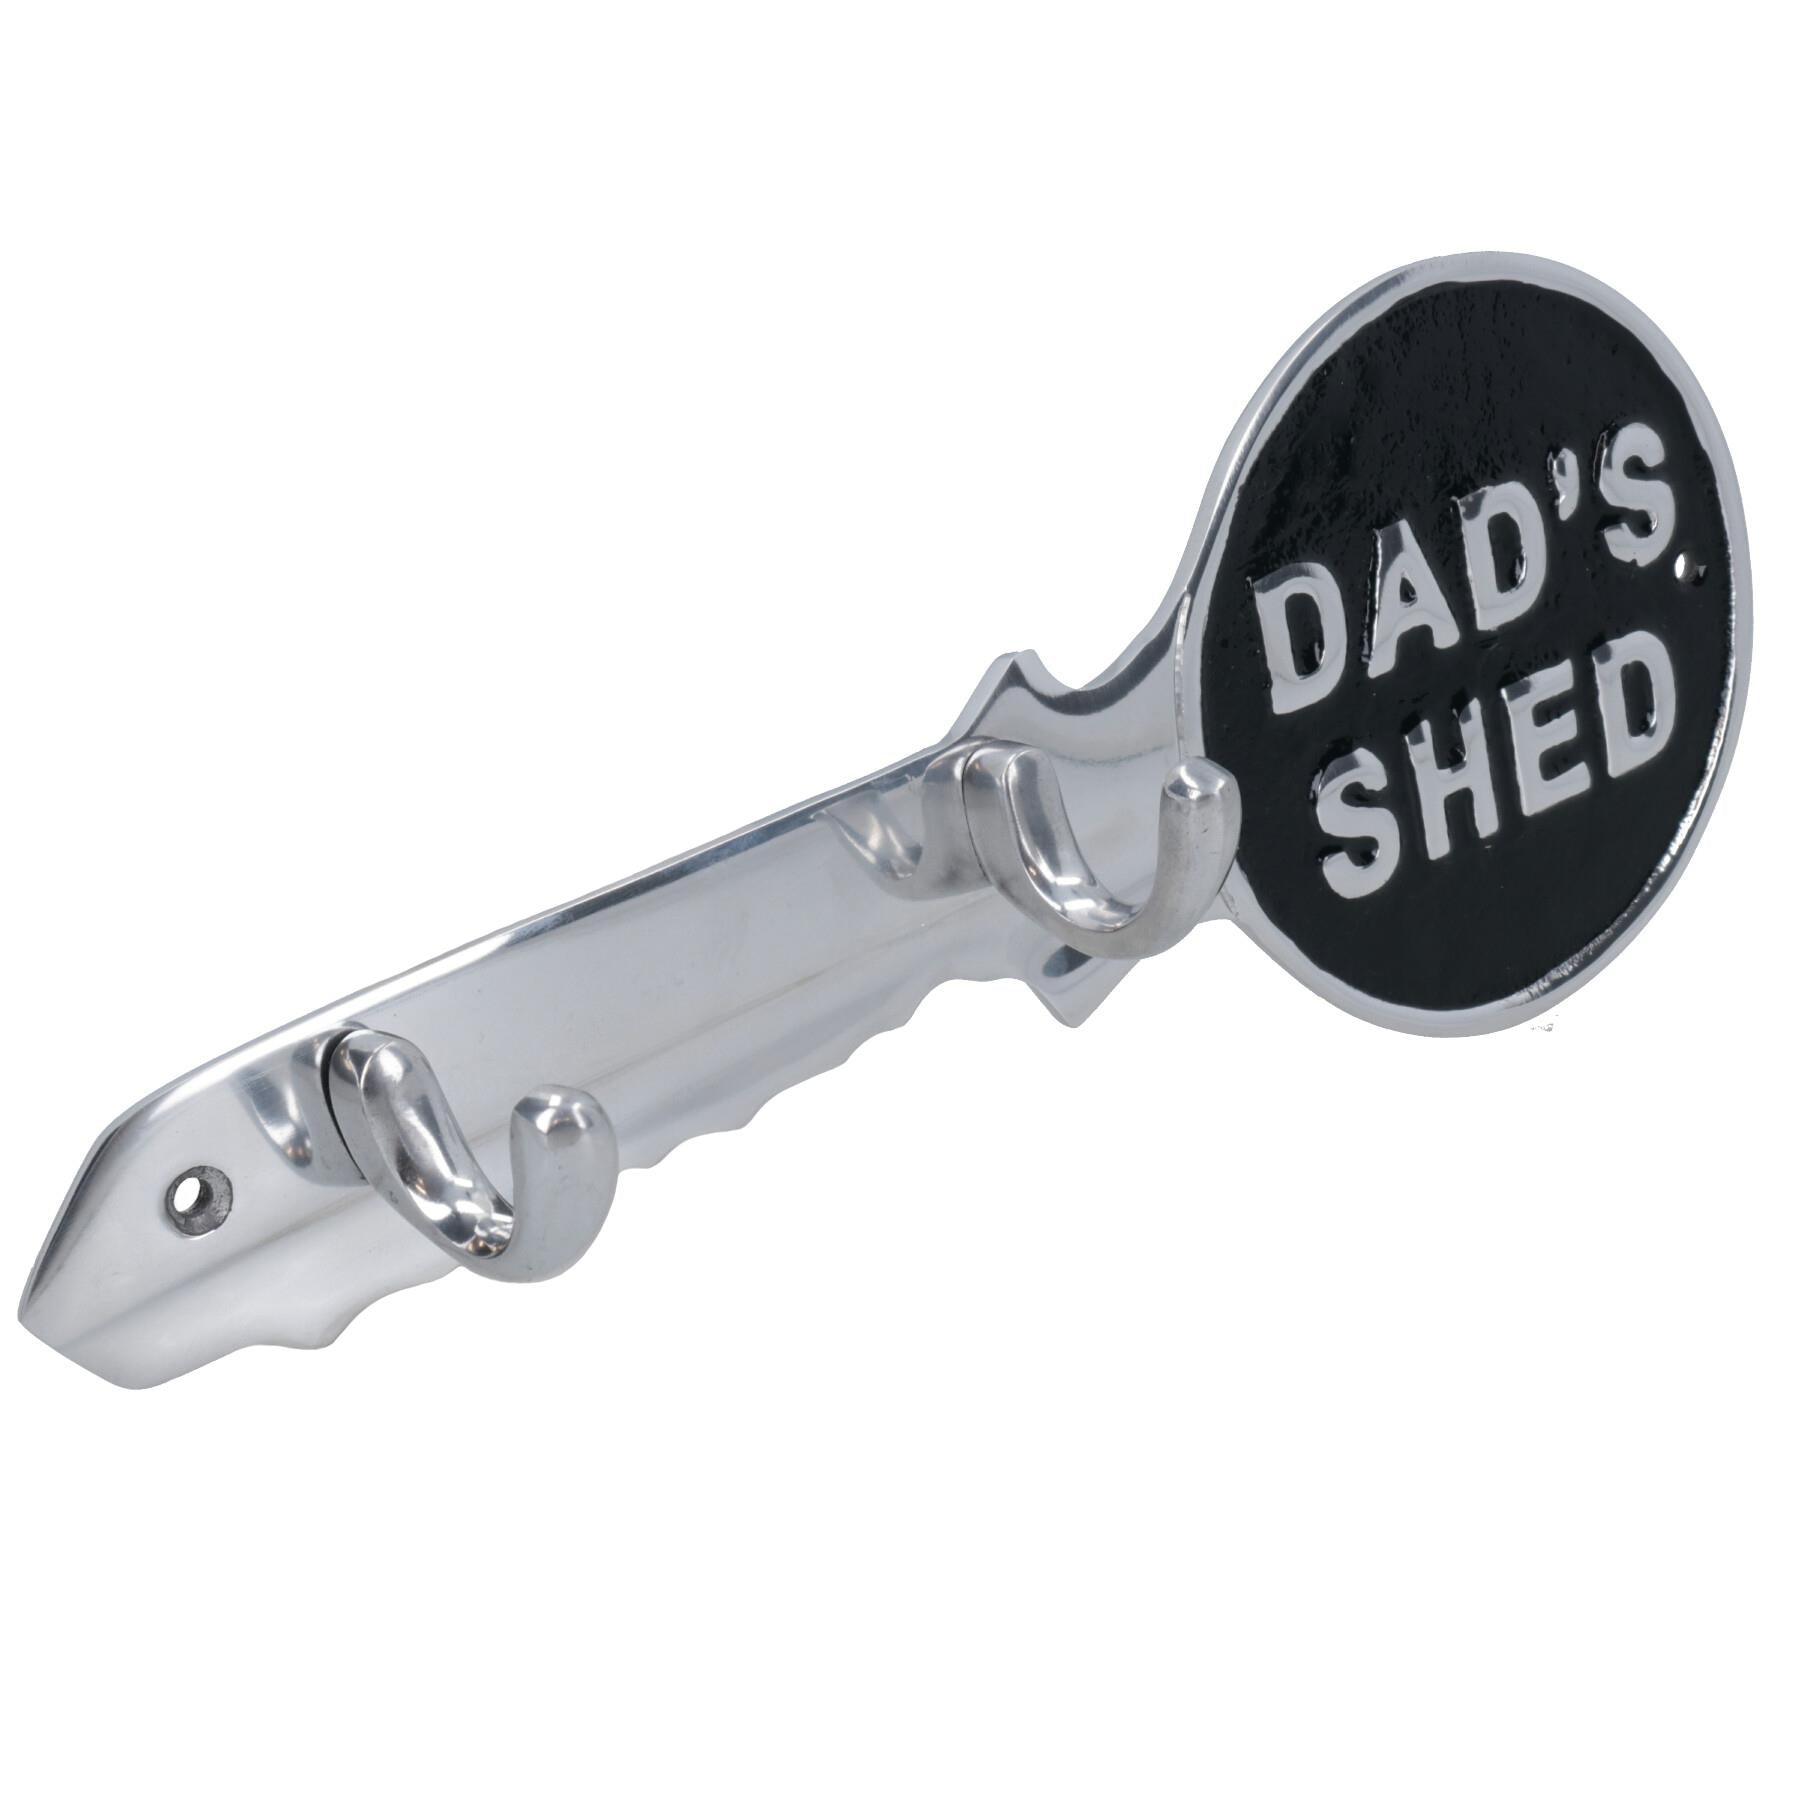 Dads Shed Coat Jacket Key Hanger / Rack 2 Hooks / Pegs Wall Hall House Garage